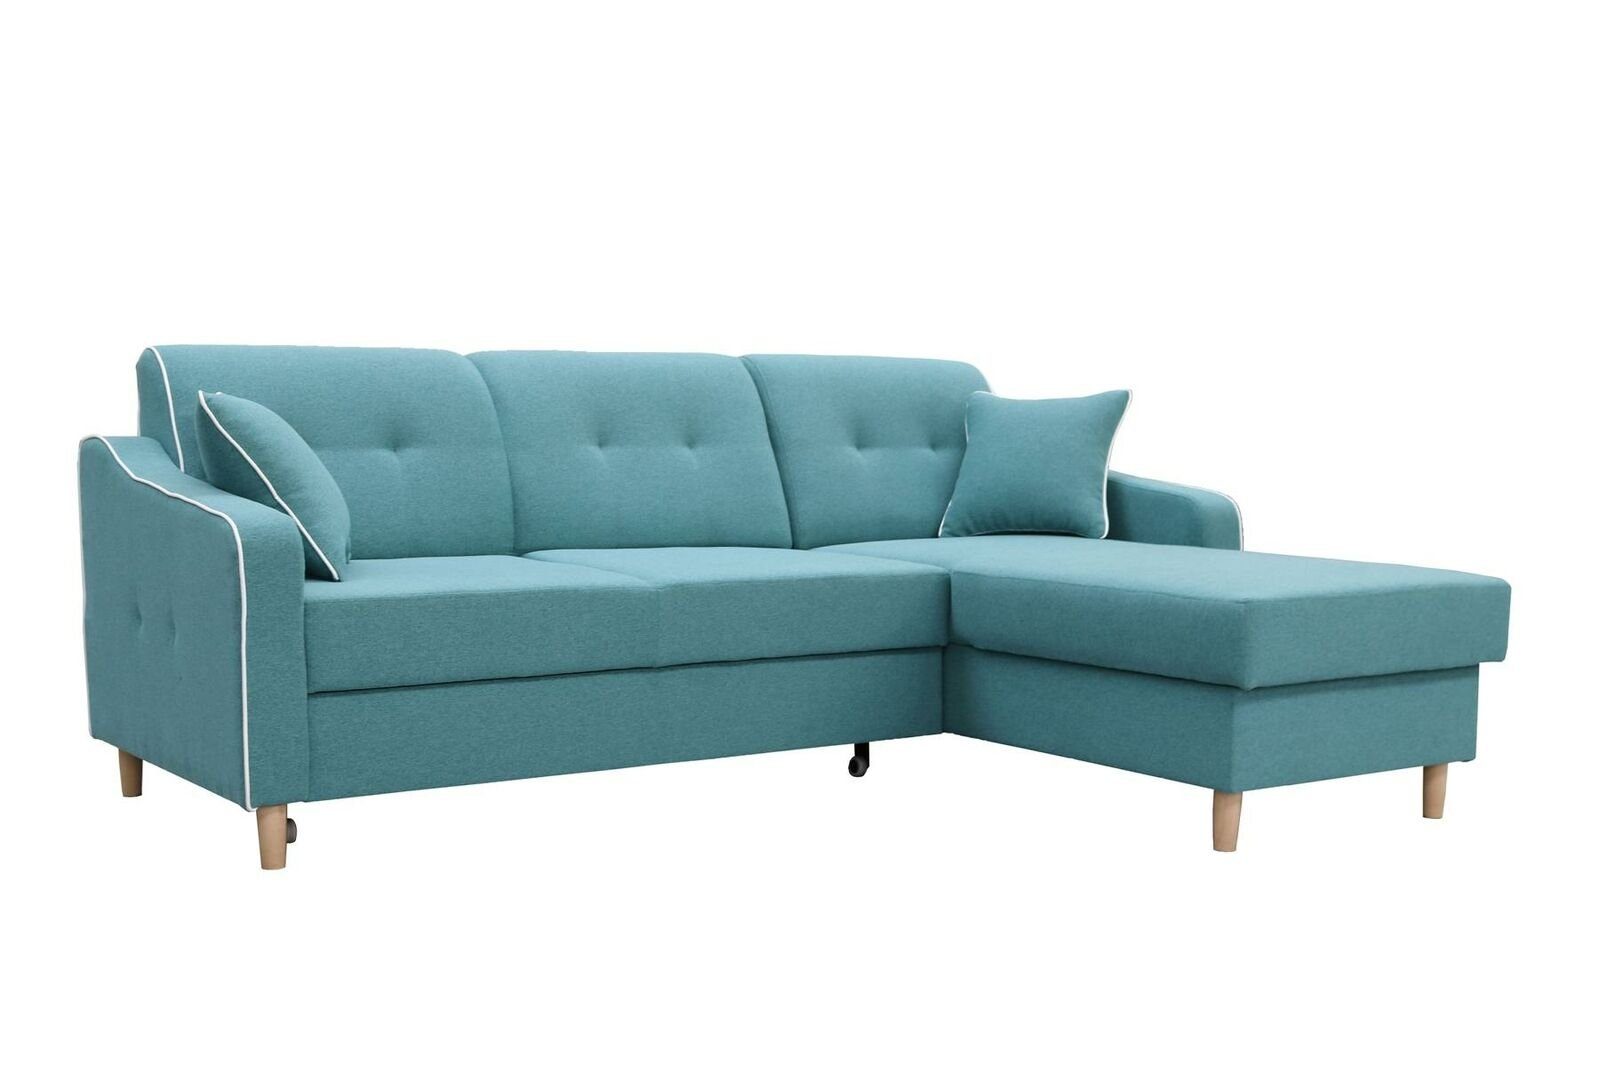 JVmoebel Sofa Sofa Textil Mit Bettfunktion Schlafsofa Polster Bettfunkt, Couch L-Form Ecksofa Design